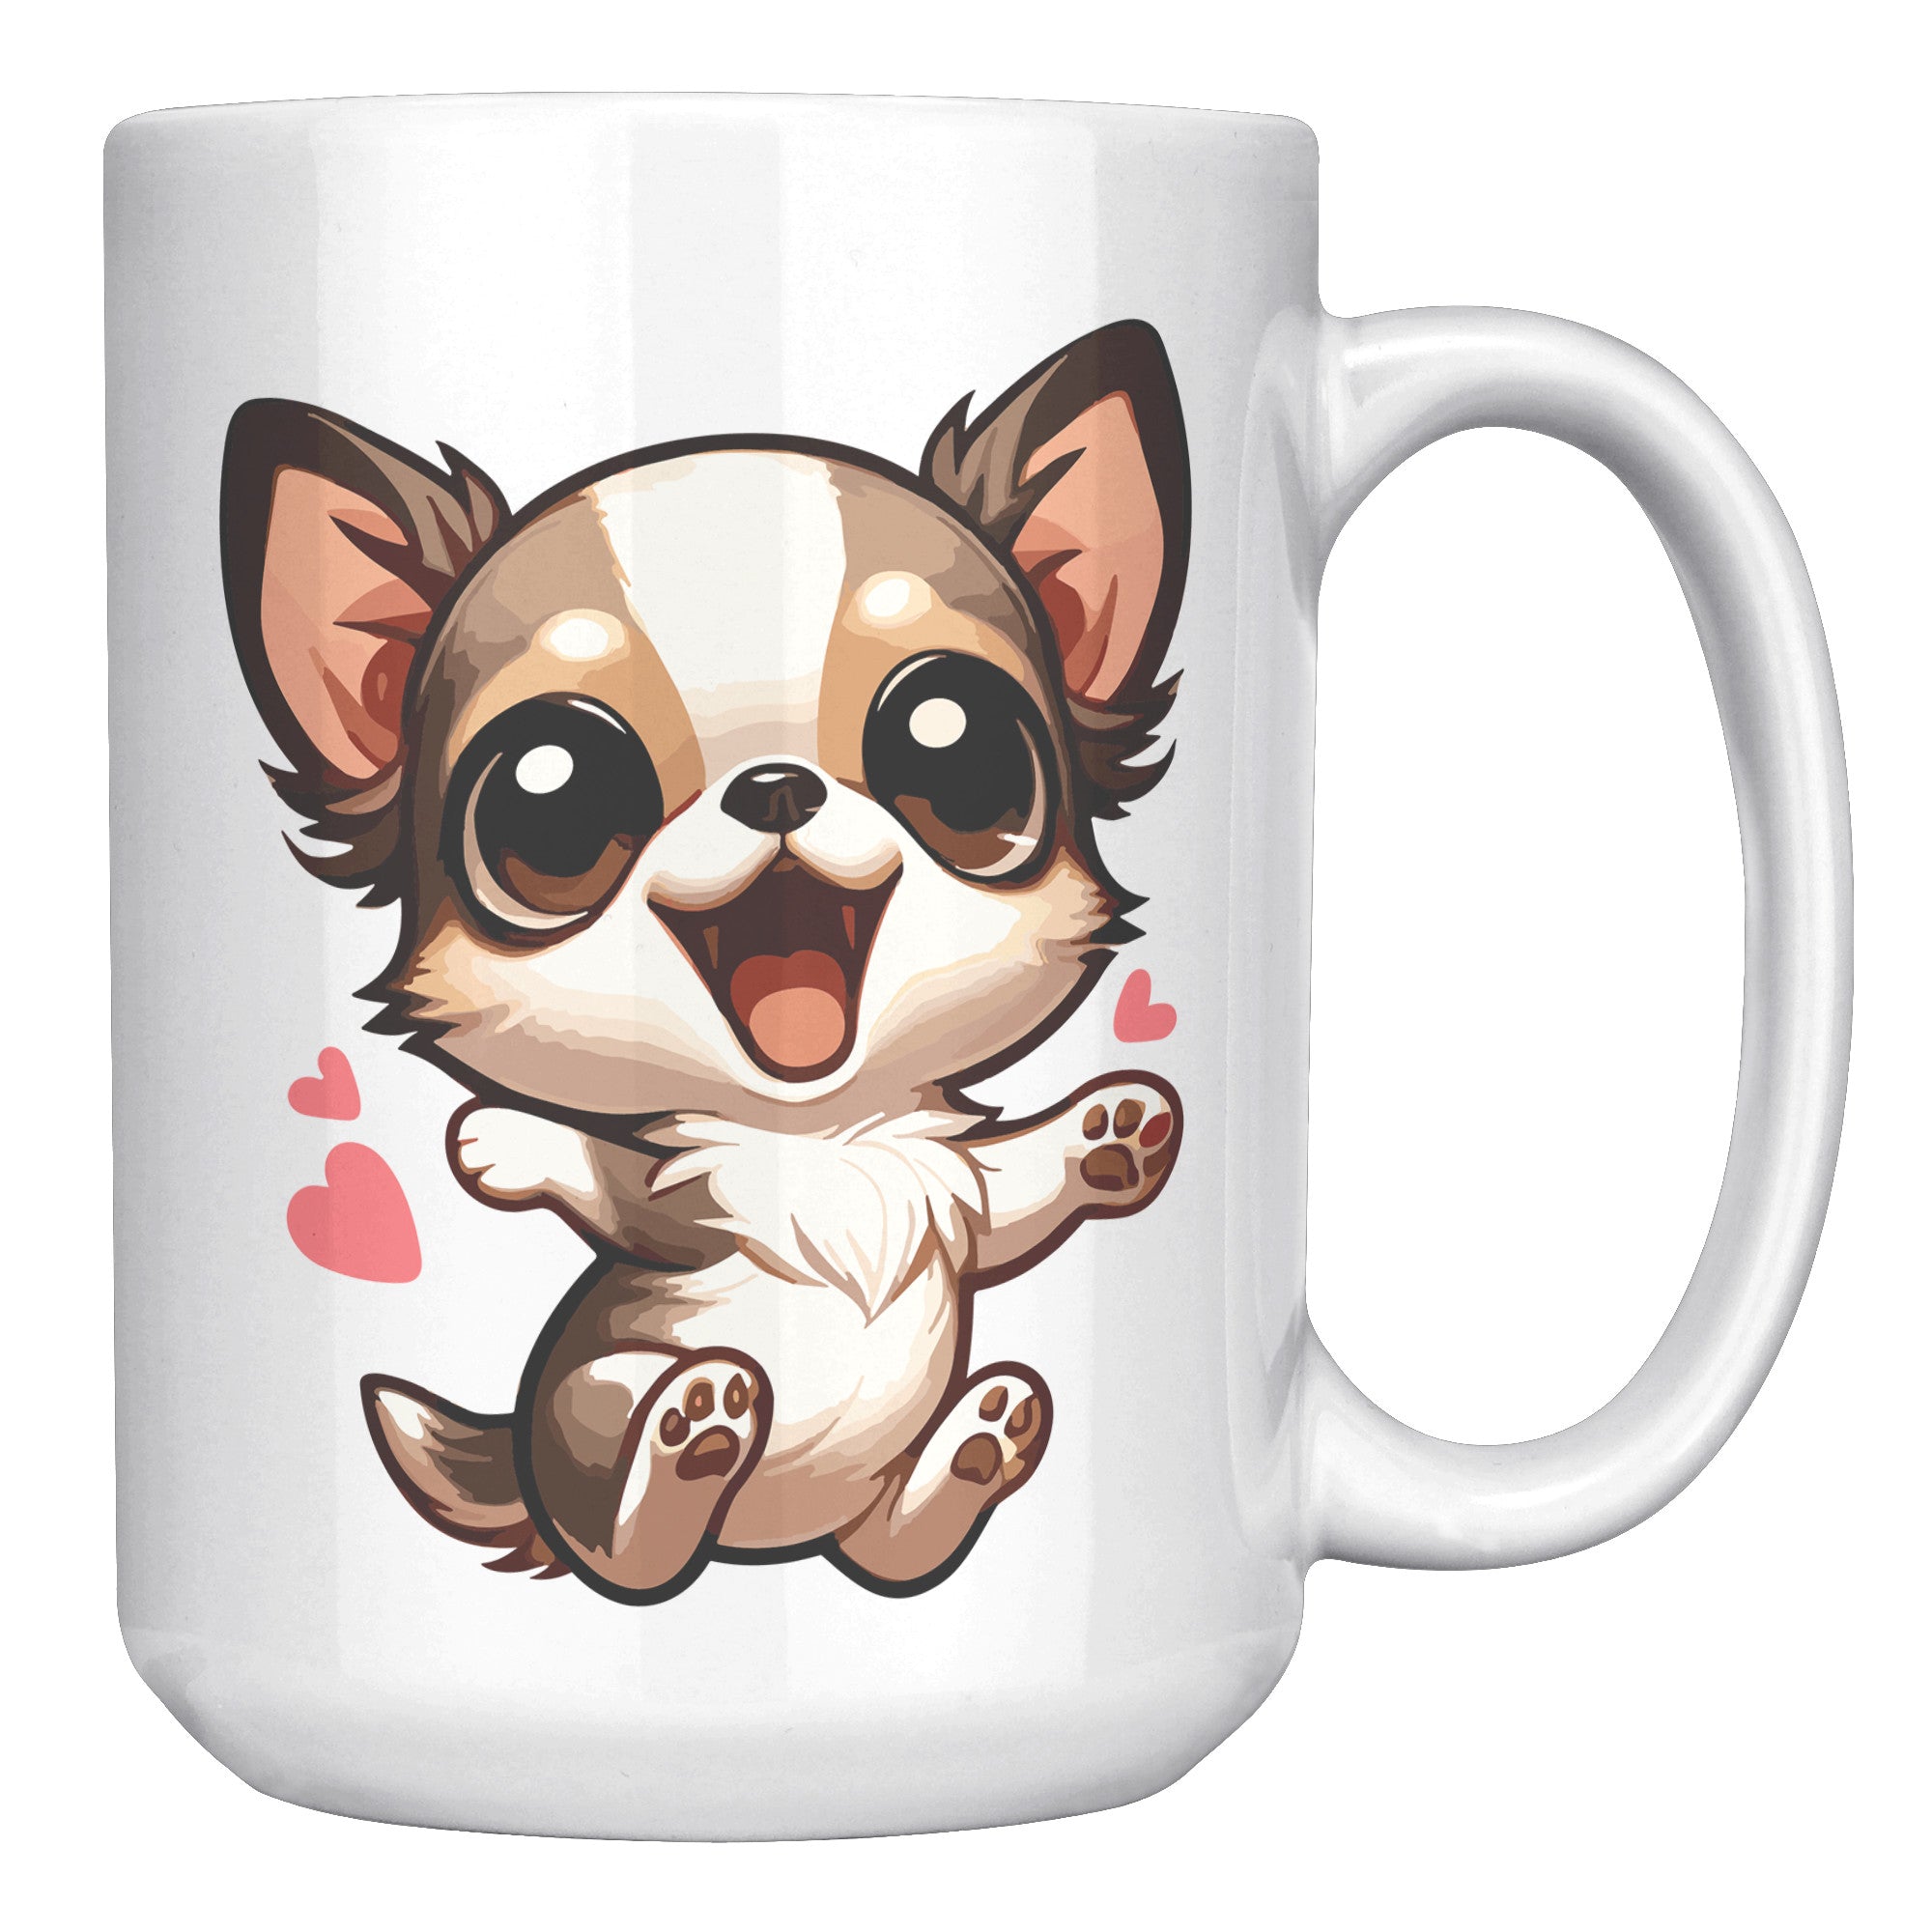 15oz Charming Chihuahua Cartoon Cofee Mugs - Cute Dog Lover Mug - Perfect Gift for Chihuahua Owners - Adorable Puppy Graphic Coffee Mug - A